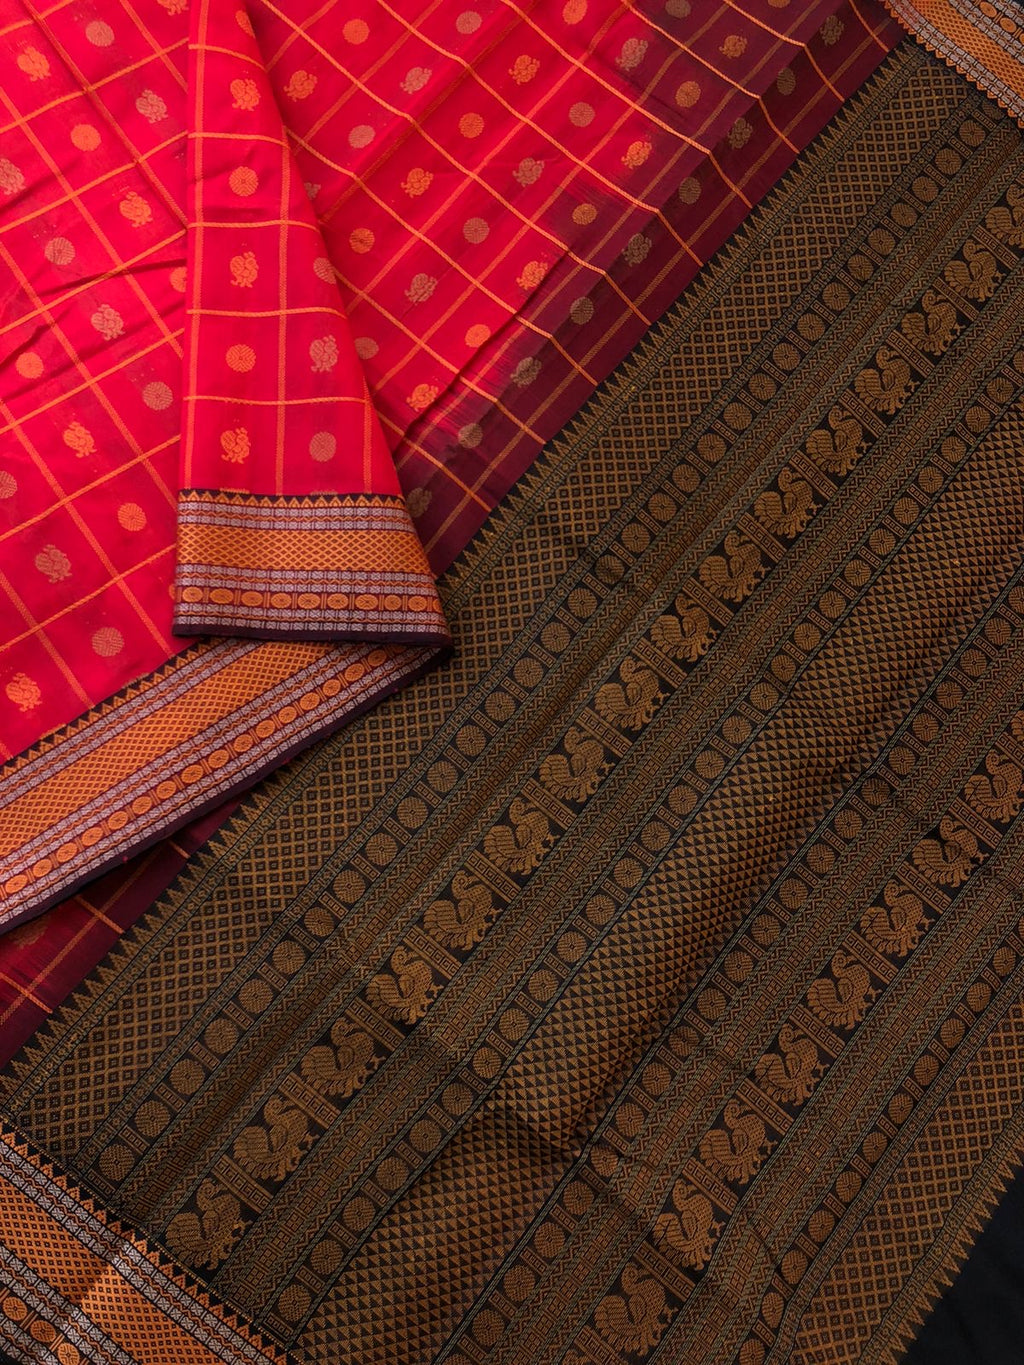 Woven Motifs Silk Cotton - red and black 1000 buttas